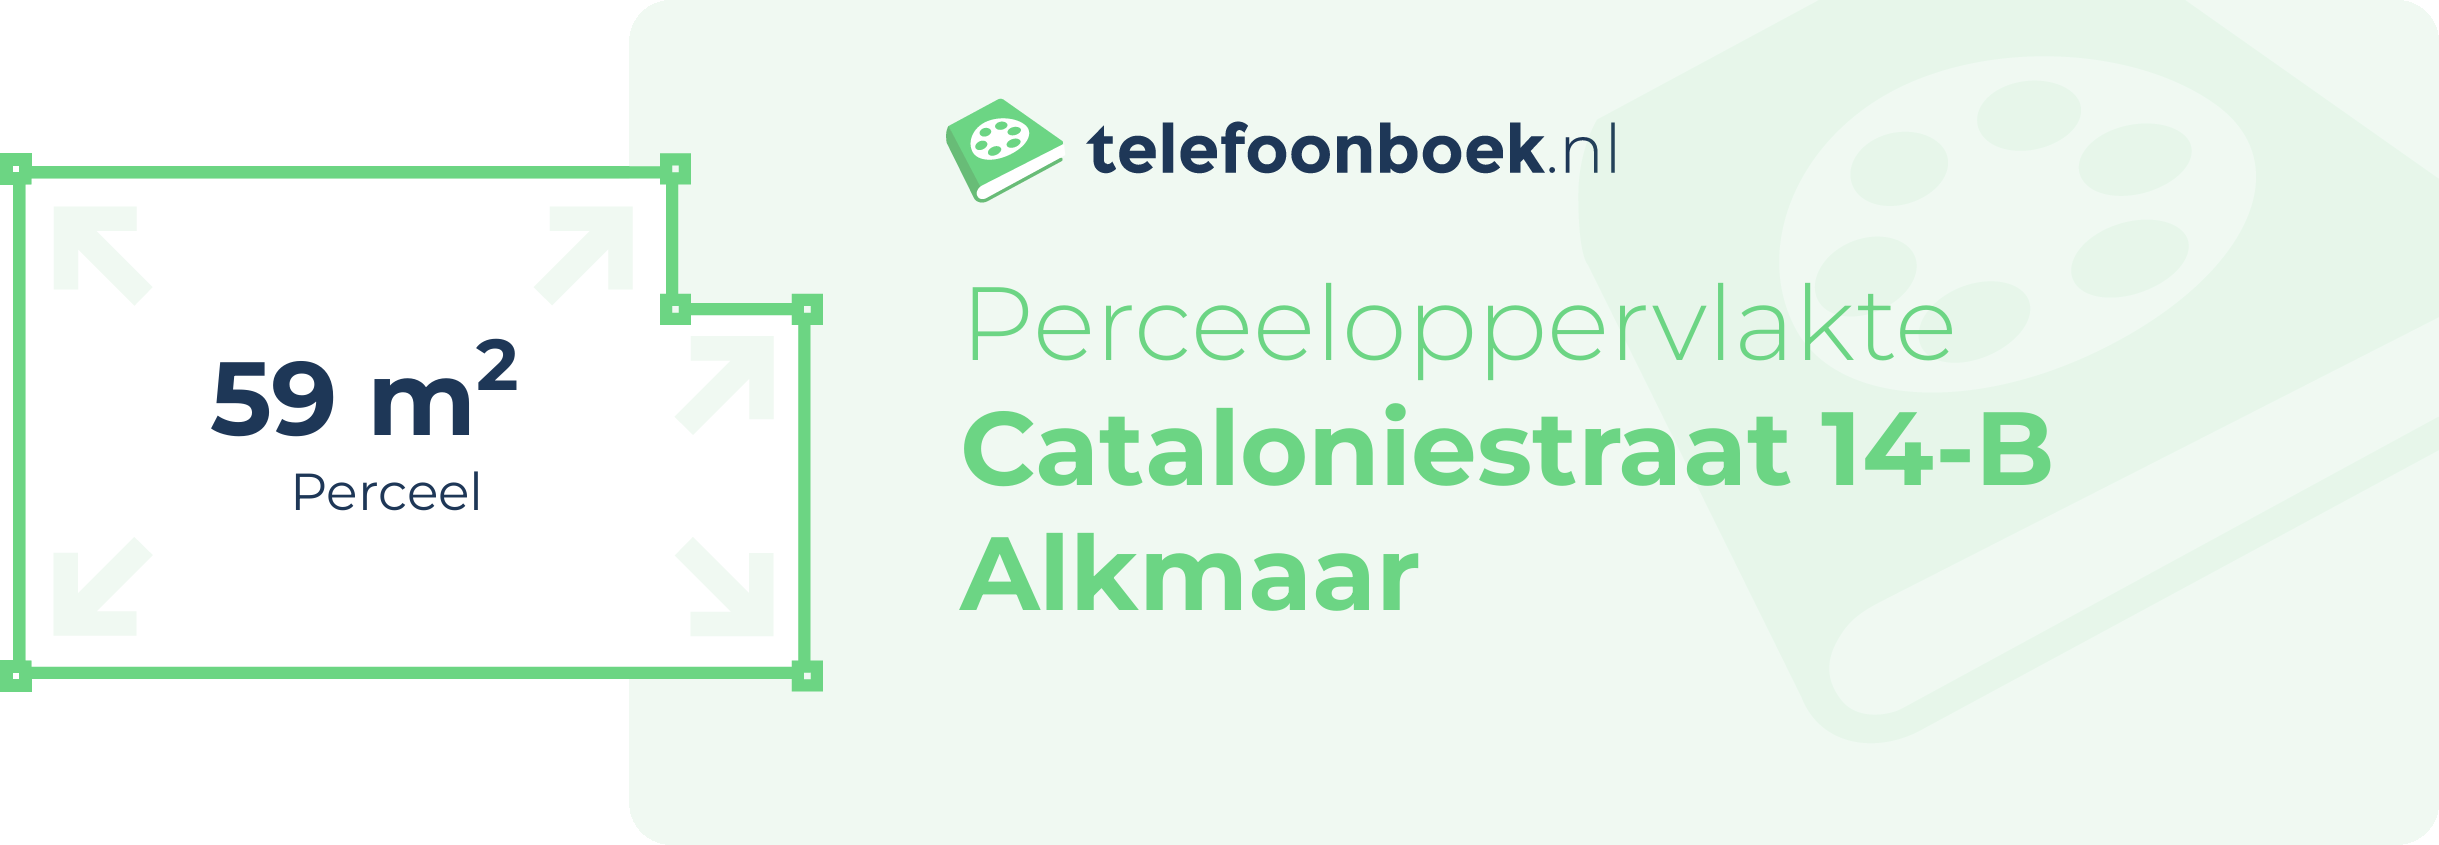 Perceeloppervlakte Cataloniestraat 14-B Alkmaar